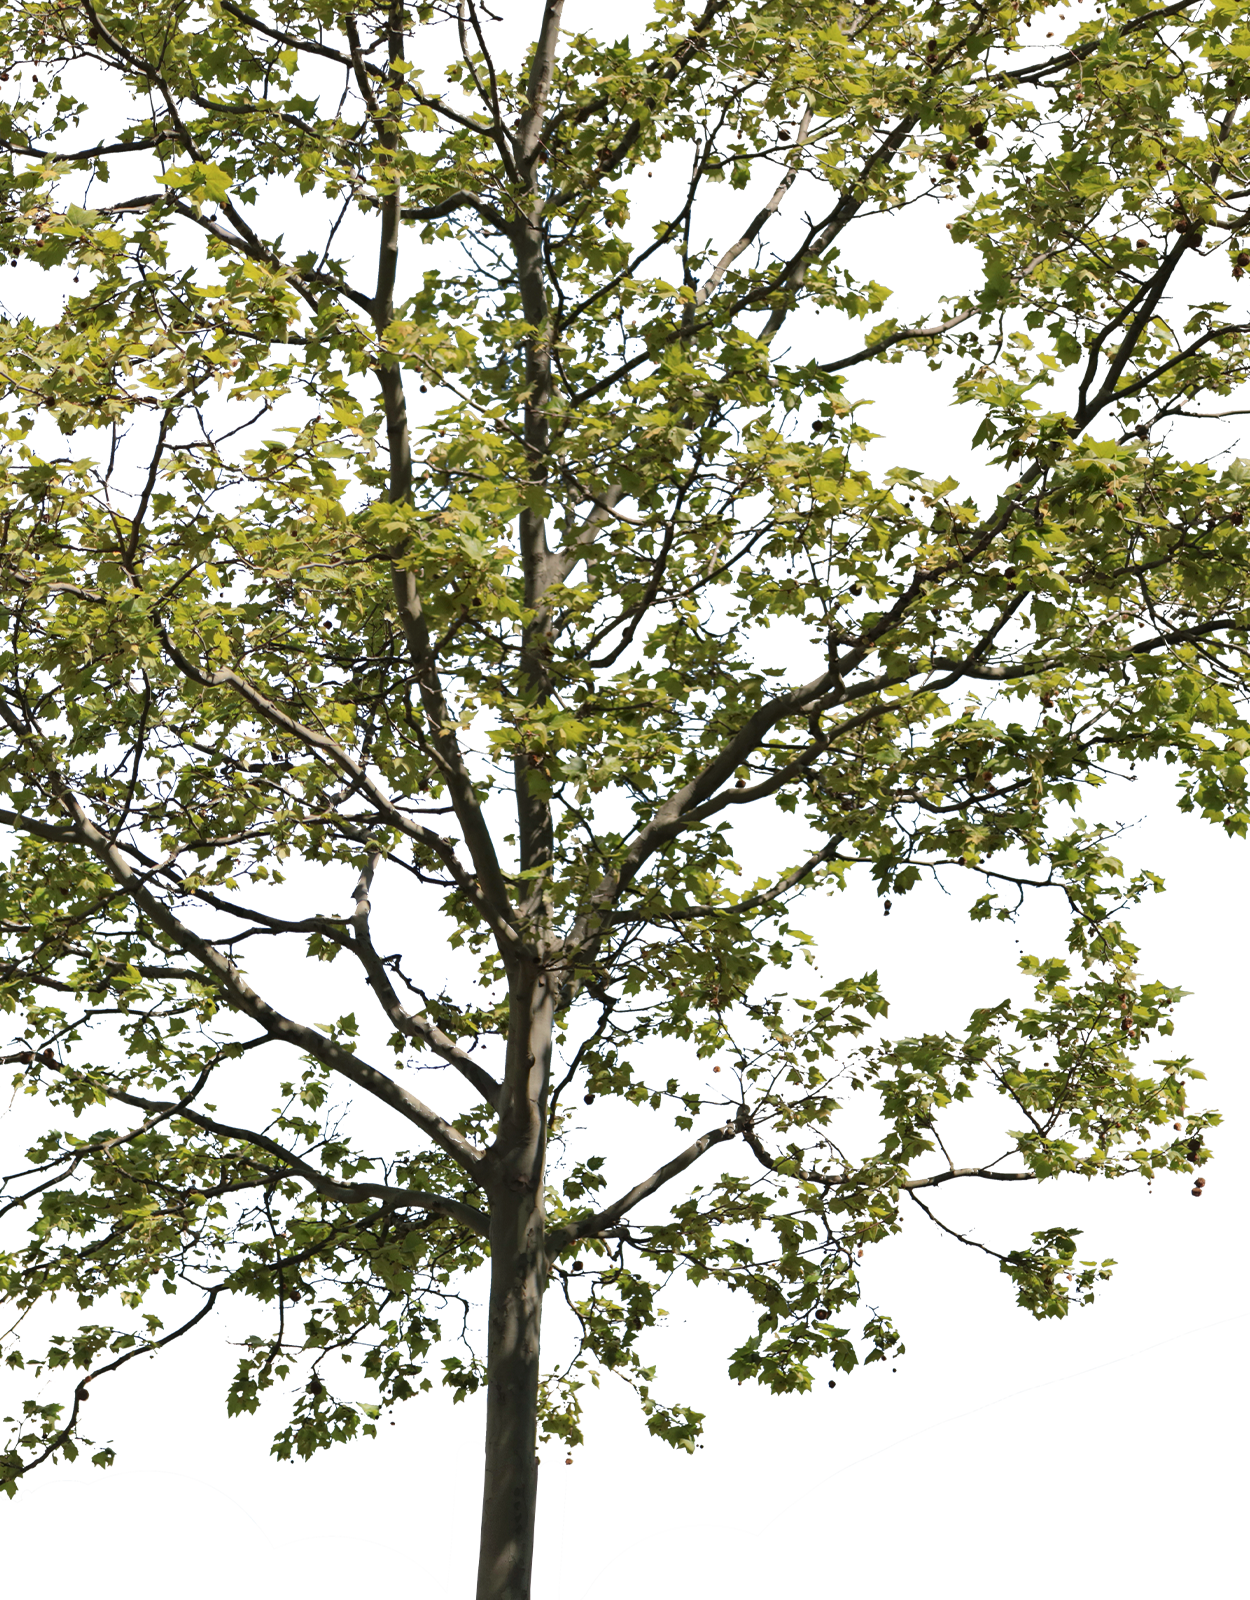 Platanus acerifolia m03 - cutout trees